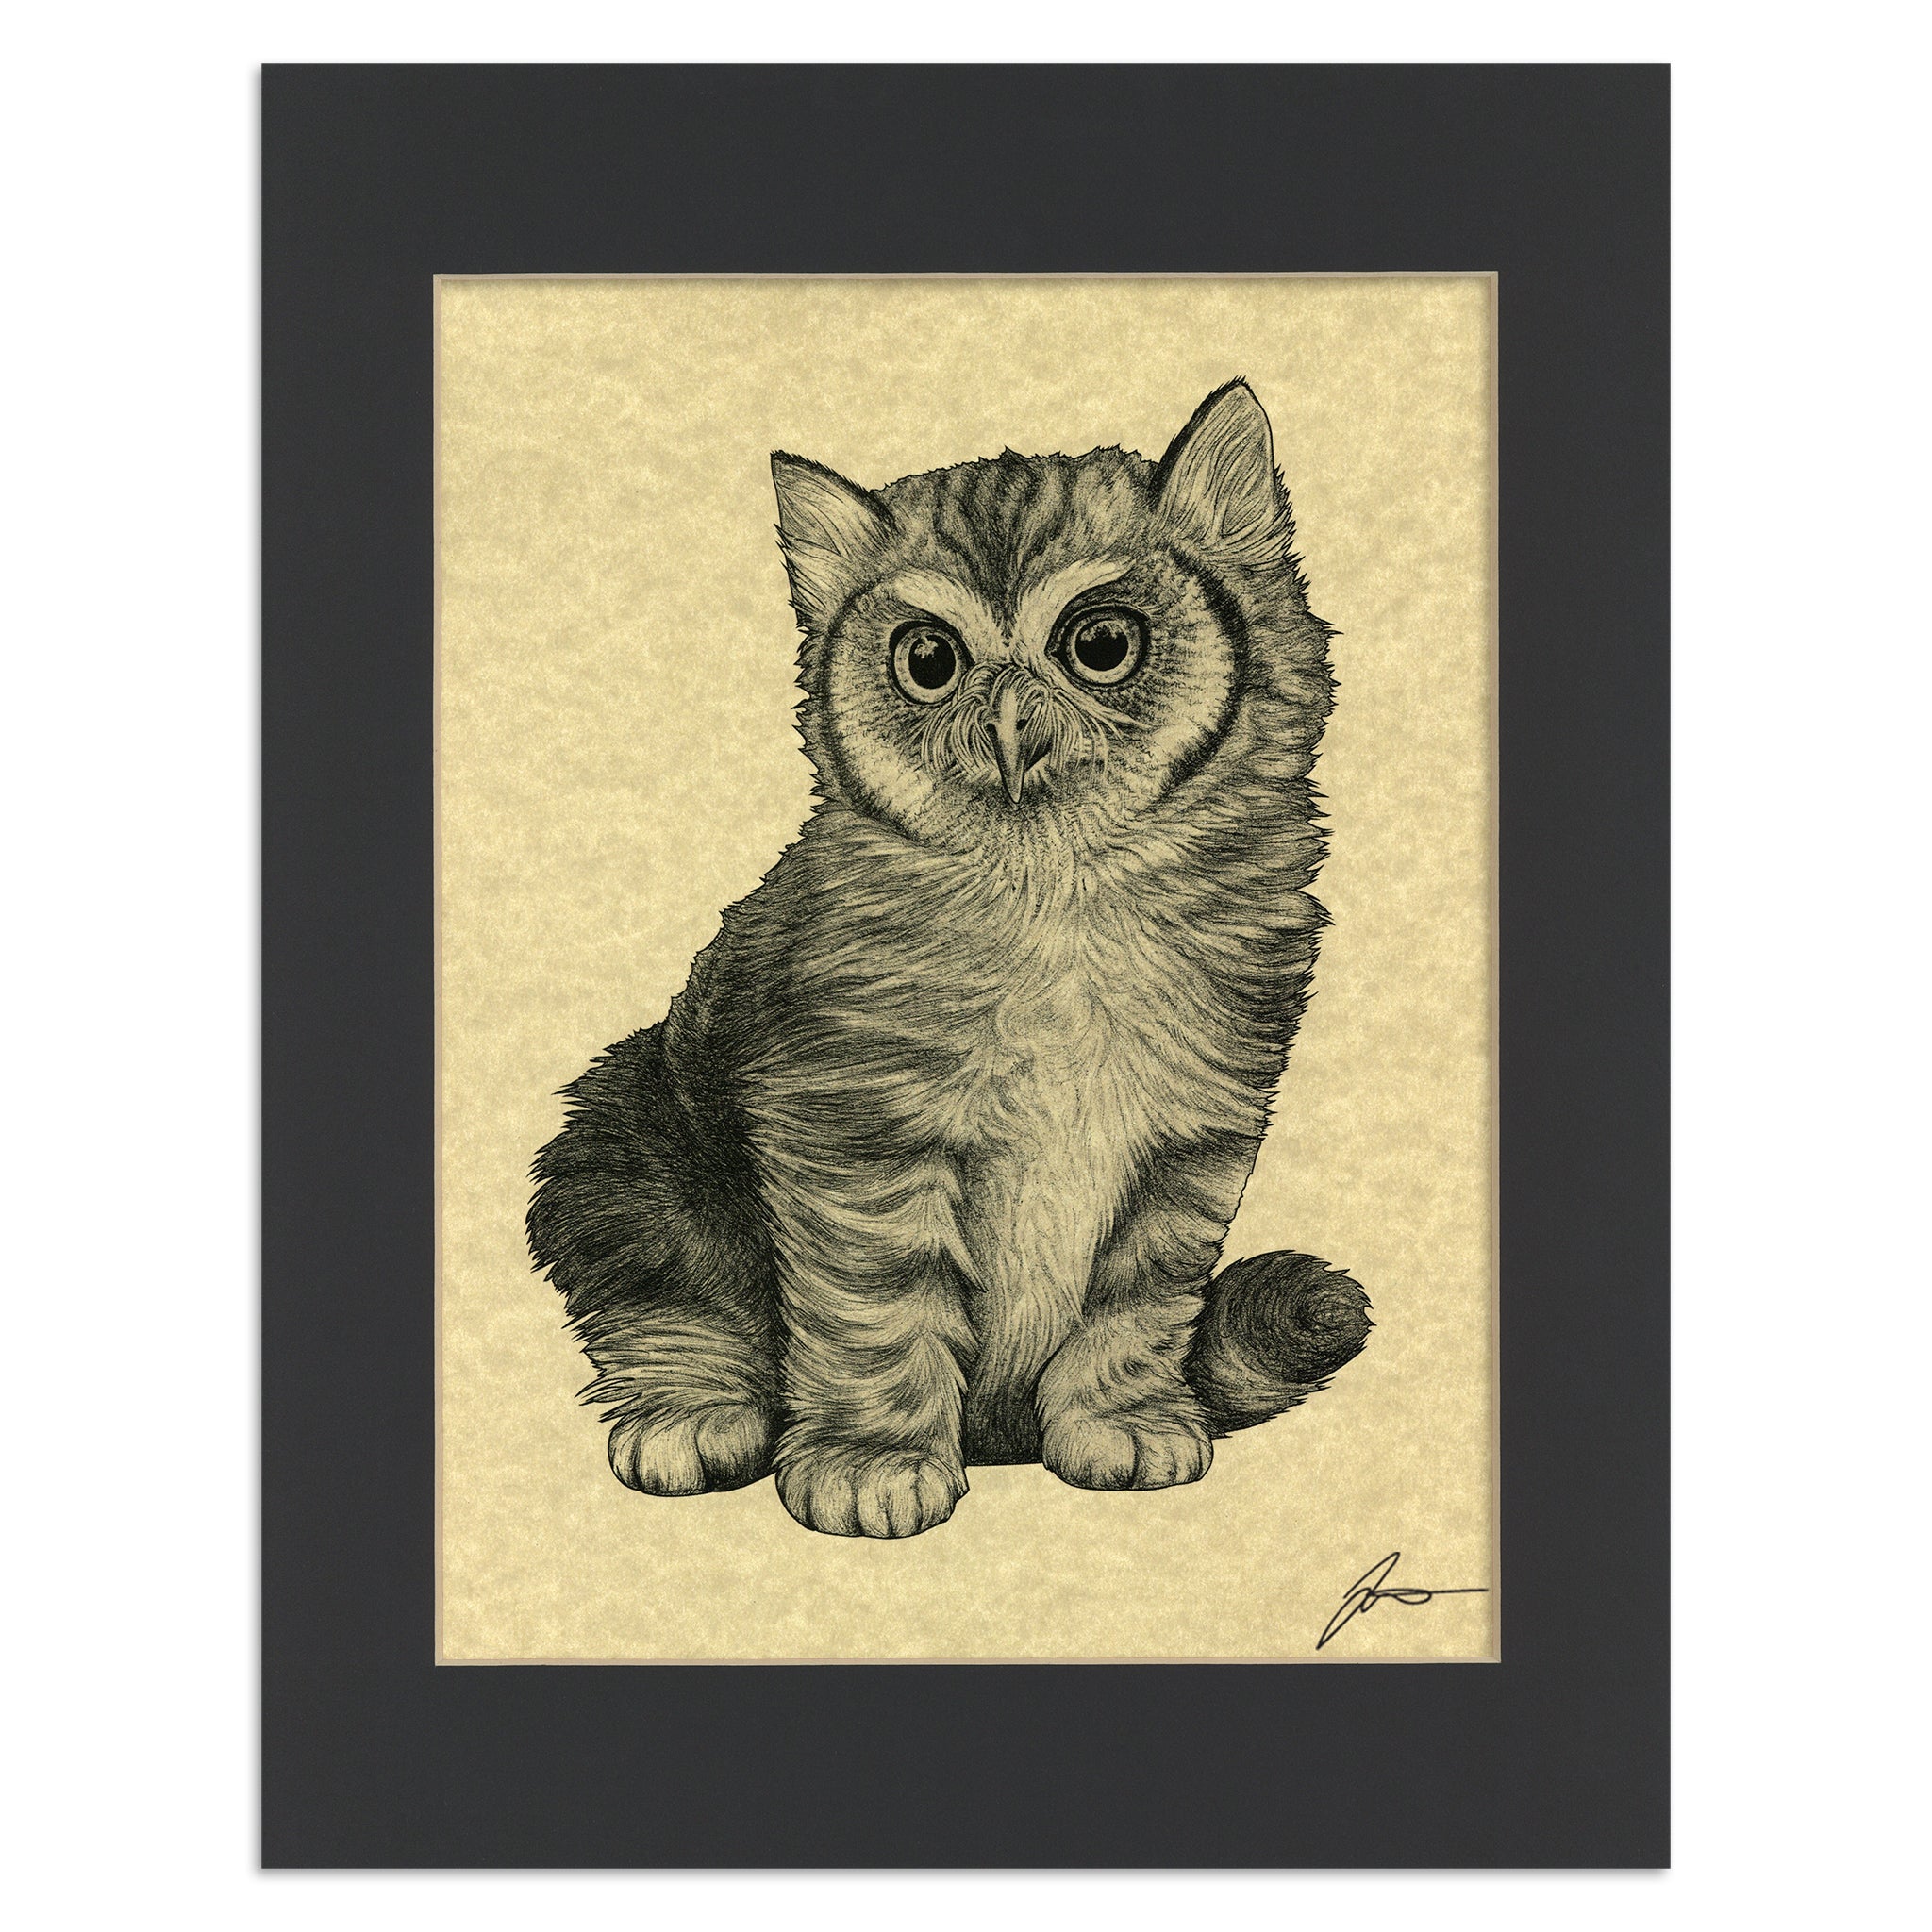 Meowl | Cat + Owl Hybrid Animal | 11x14" Parchment Print